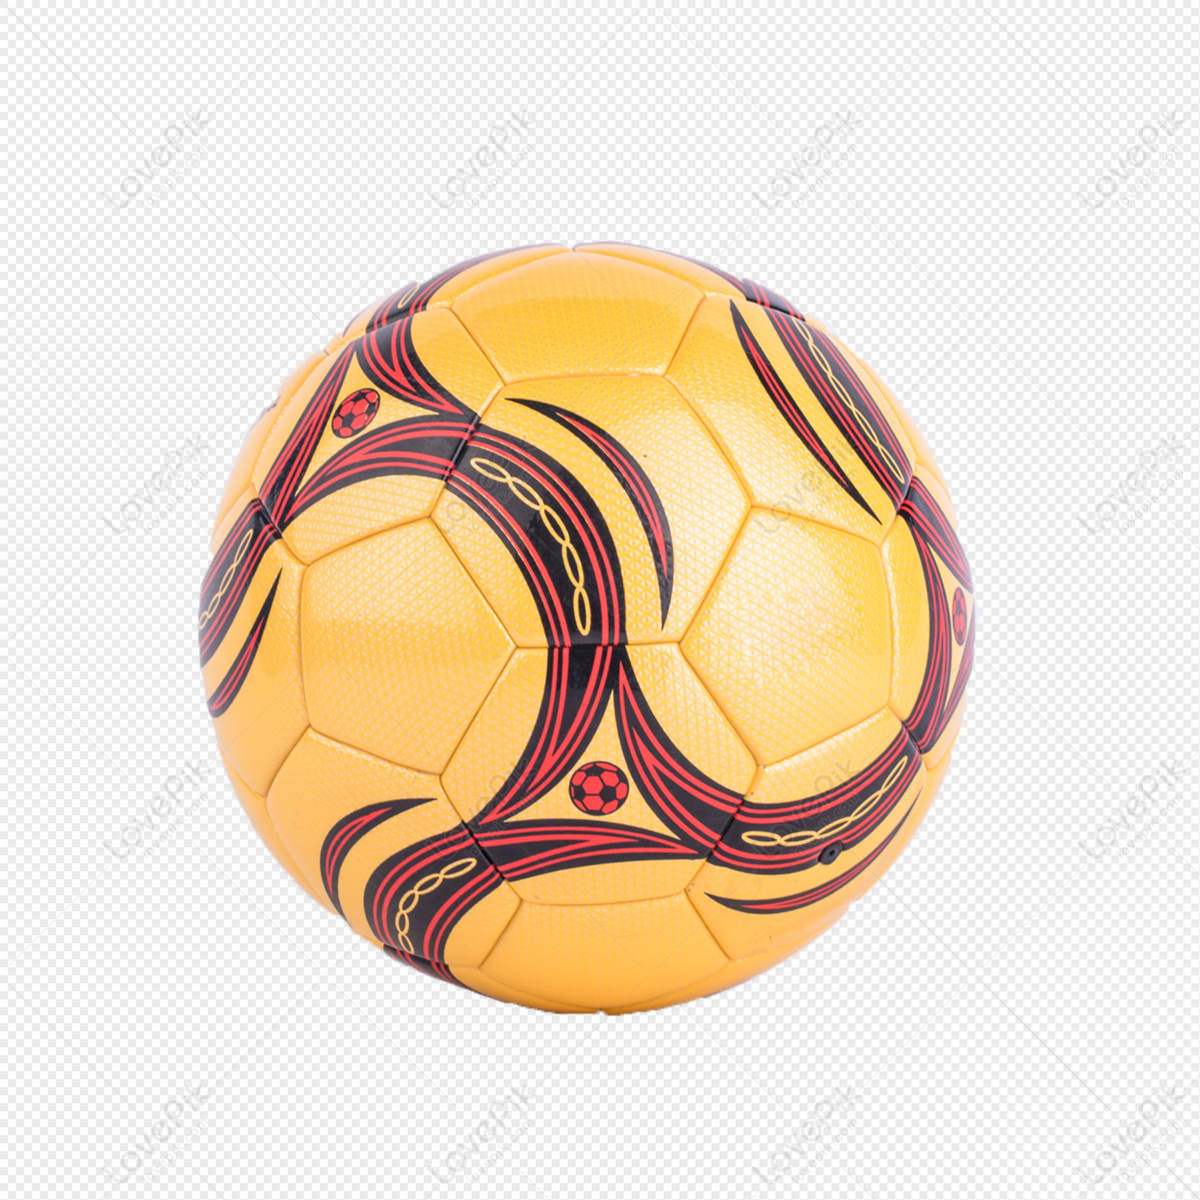 Gambar Sepak Bola Kuning PNG Unduh Gratis - Lovepik